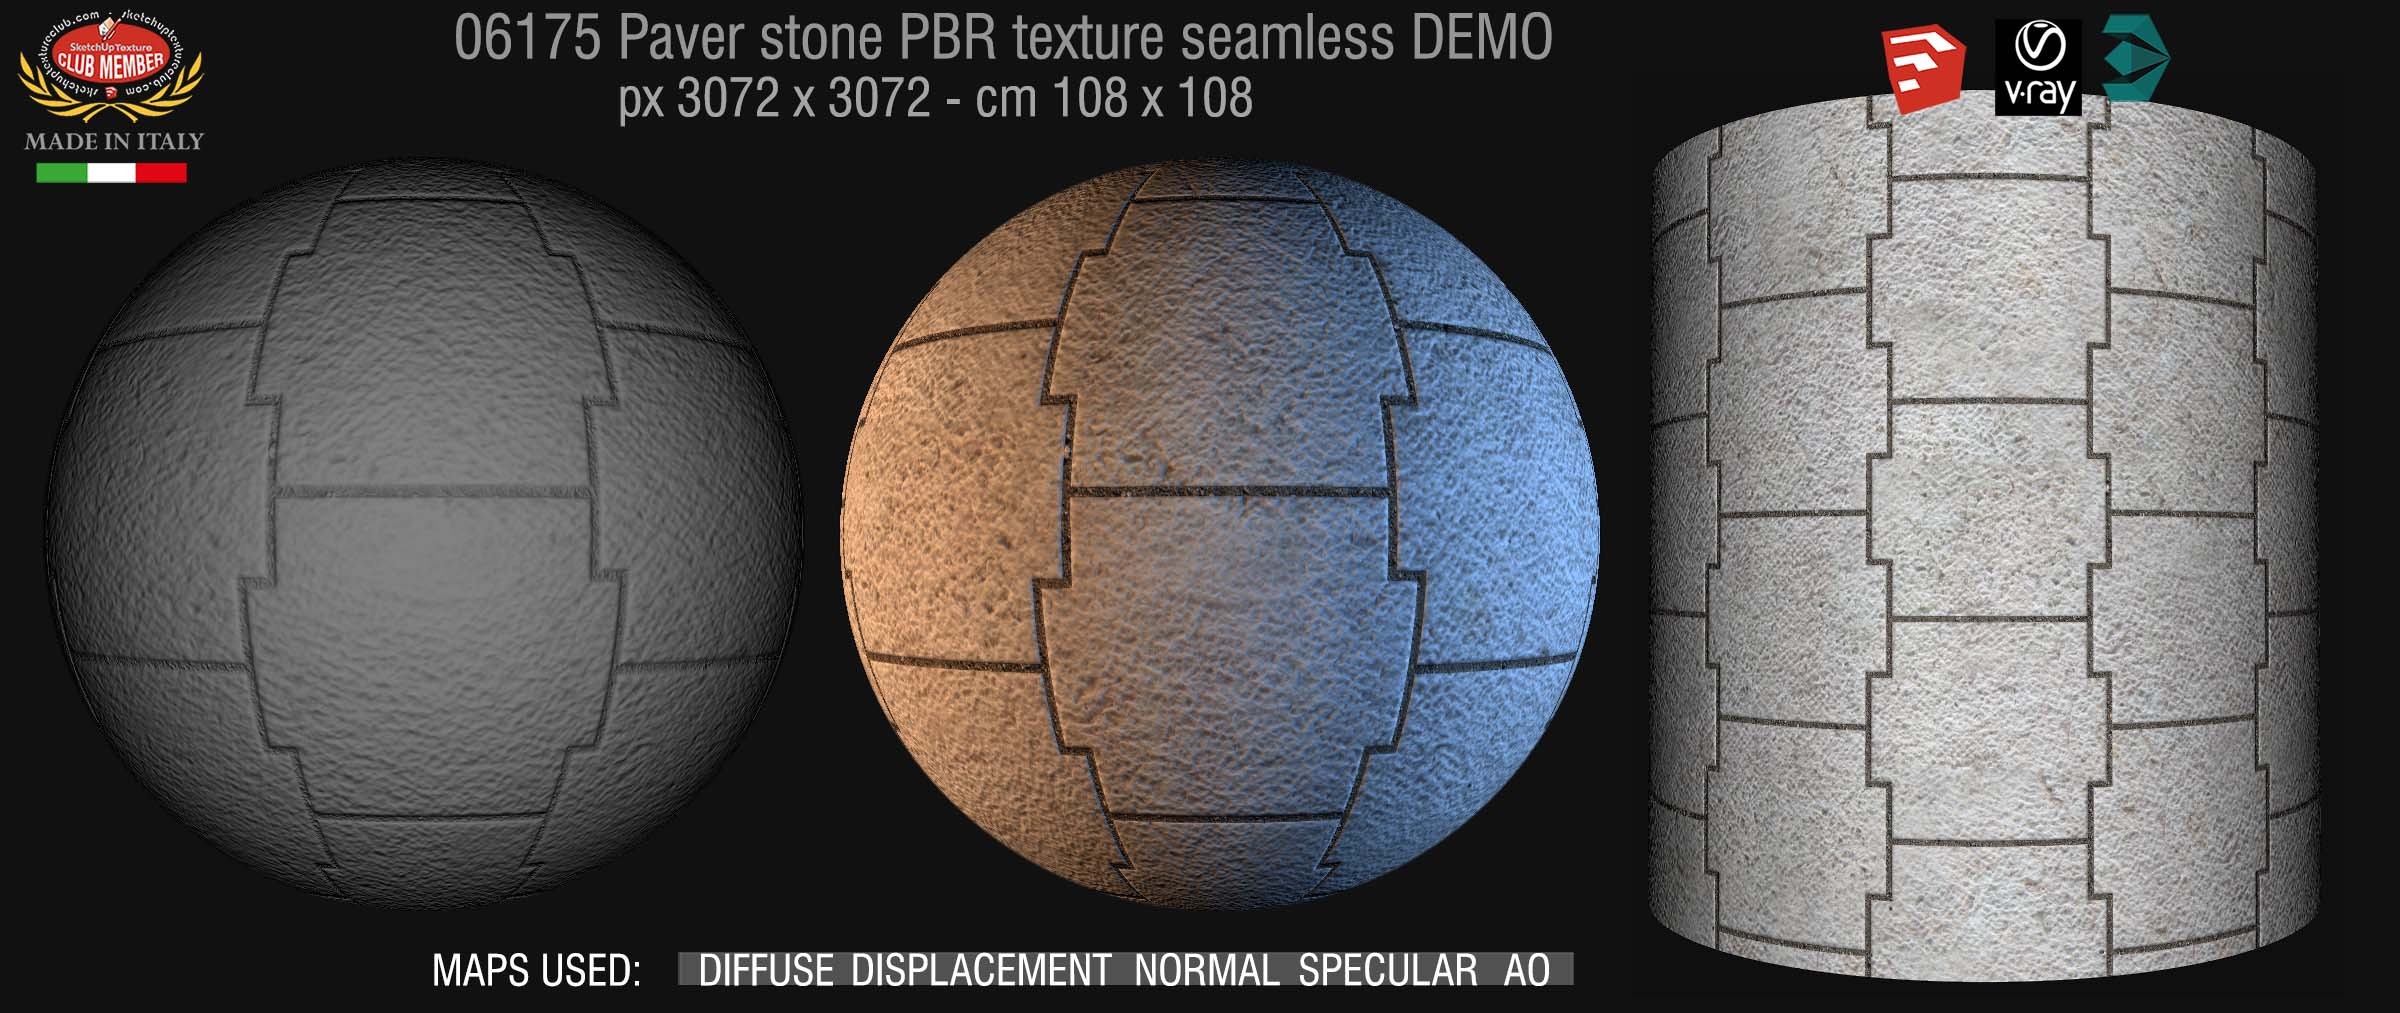 06175 paver stone PBR texture seamless DEMO